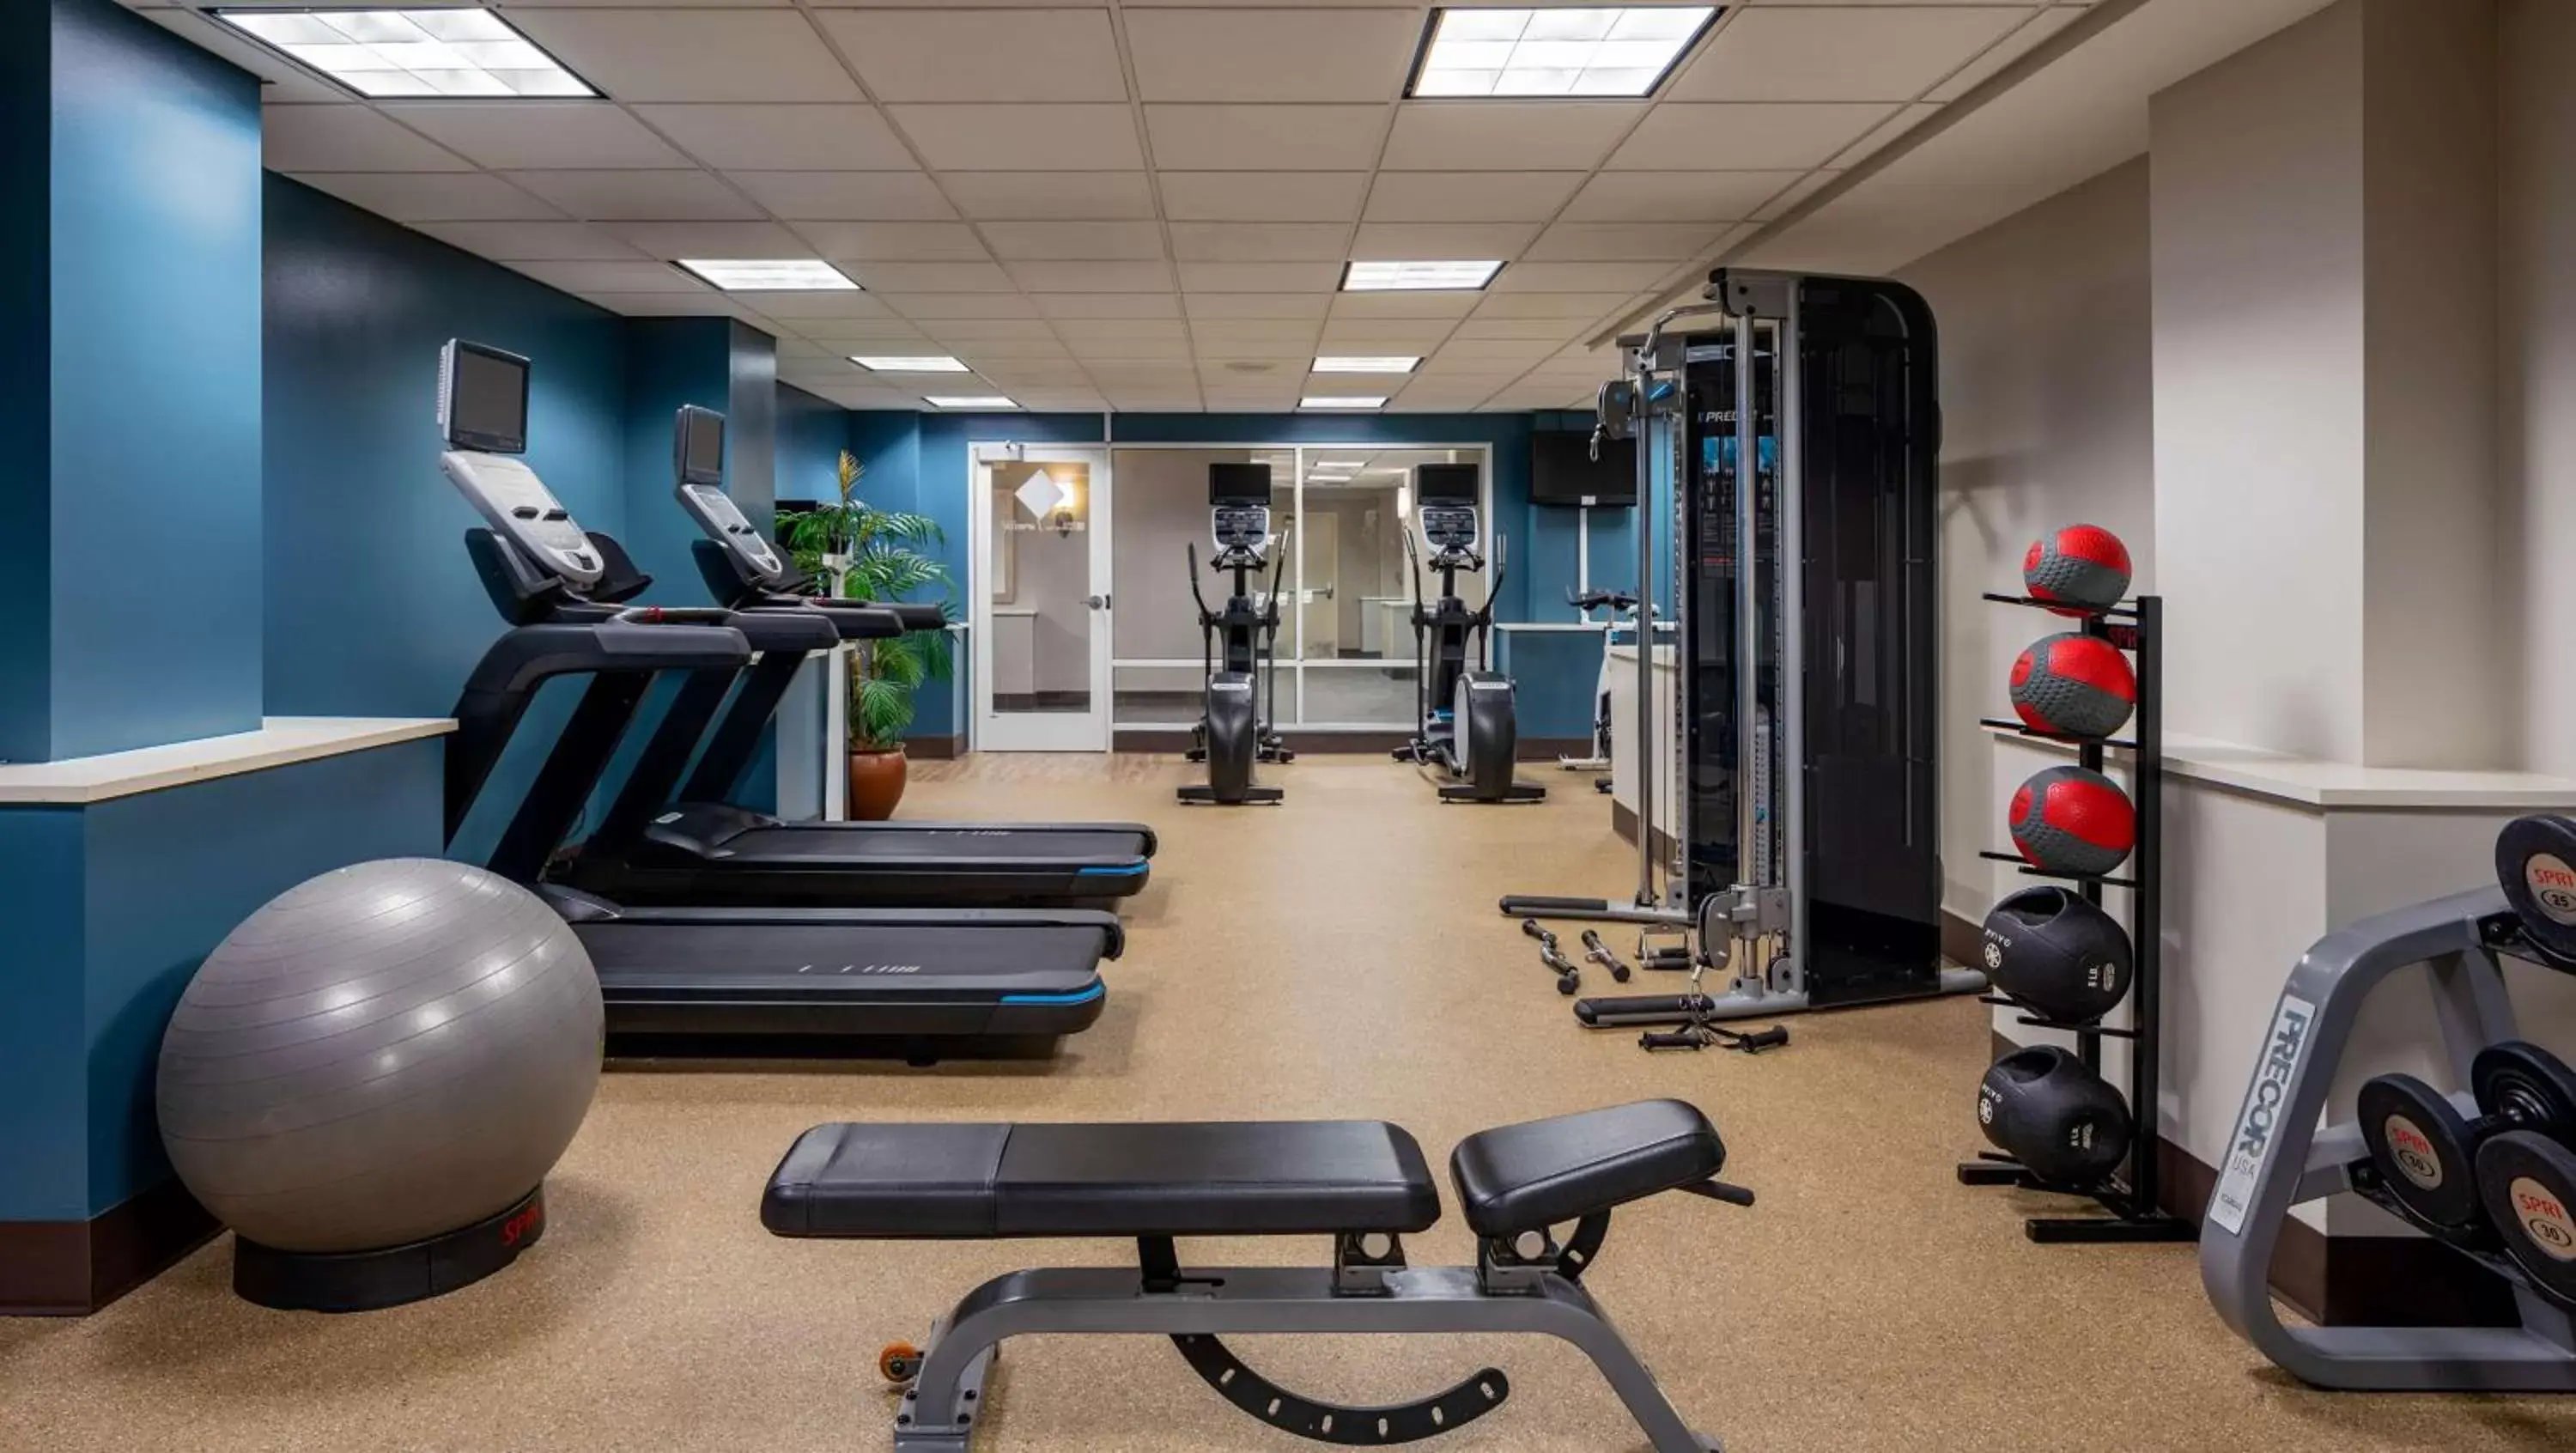 Fitness centre/facilities, Fitness Center/Facilities in Hilton Garden Inn Jackson Downtown